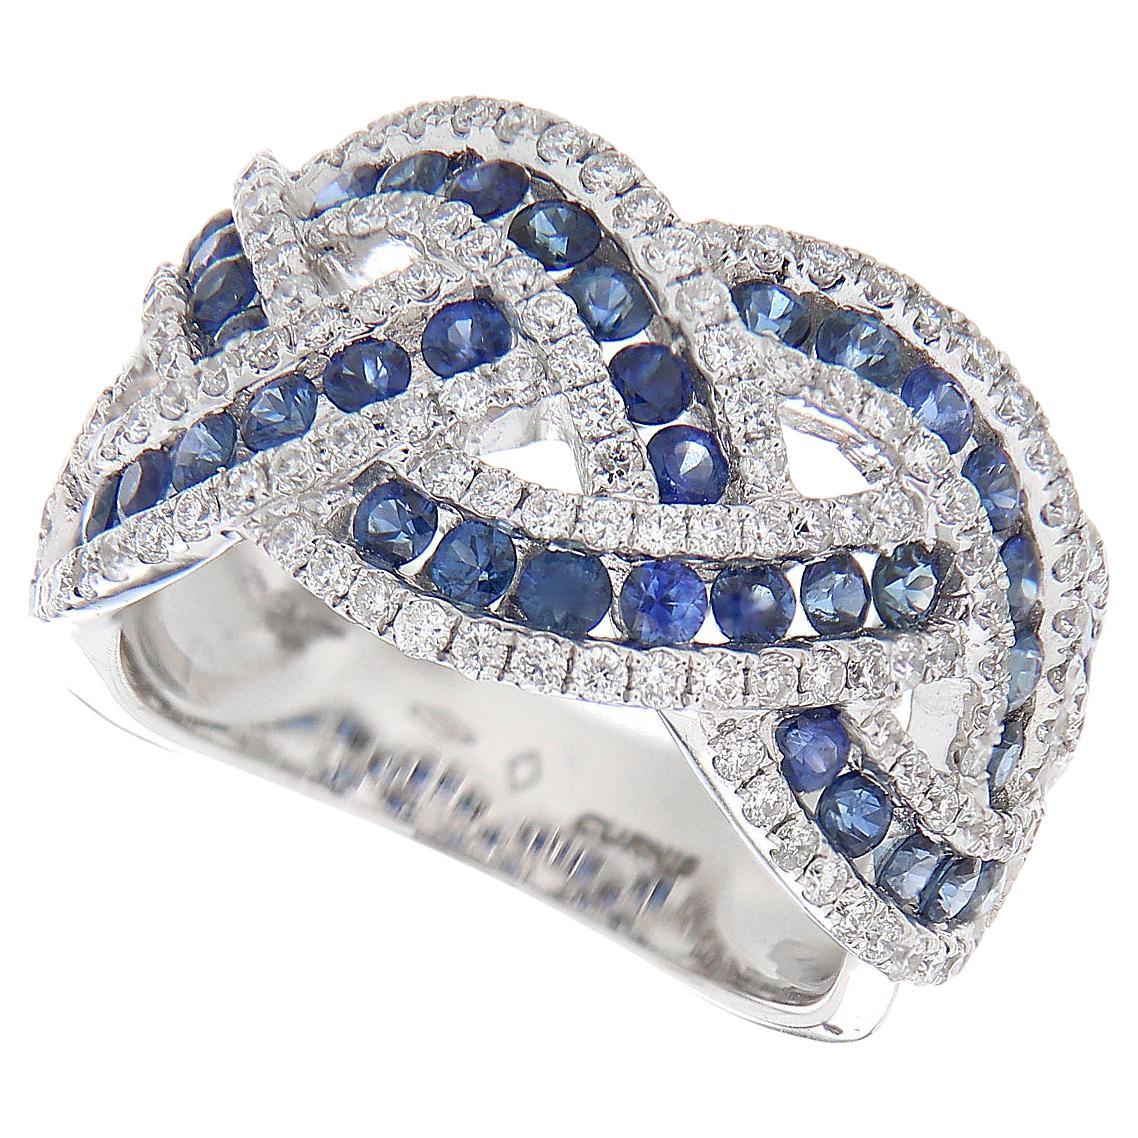 18kt White Gold Band Ring White Diamonds 1.07 Ct Blue Sapphires 1.73 Ct